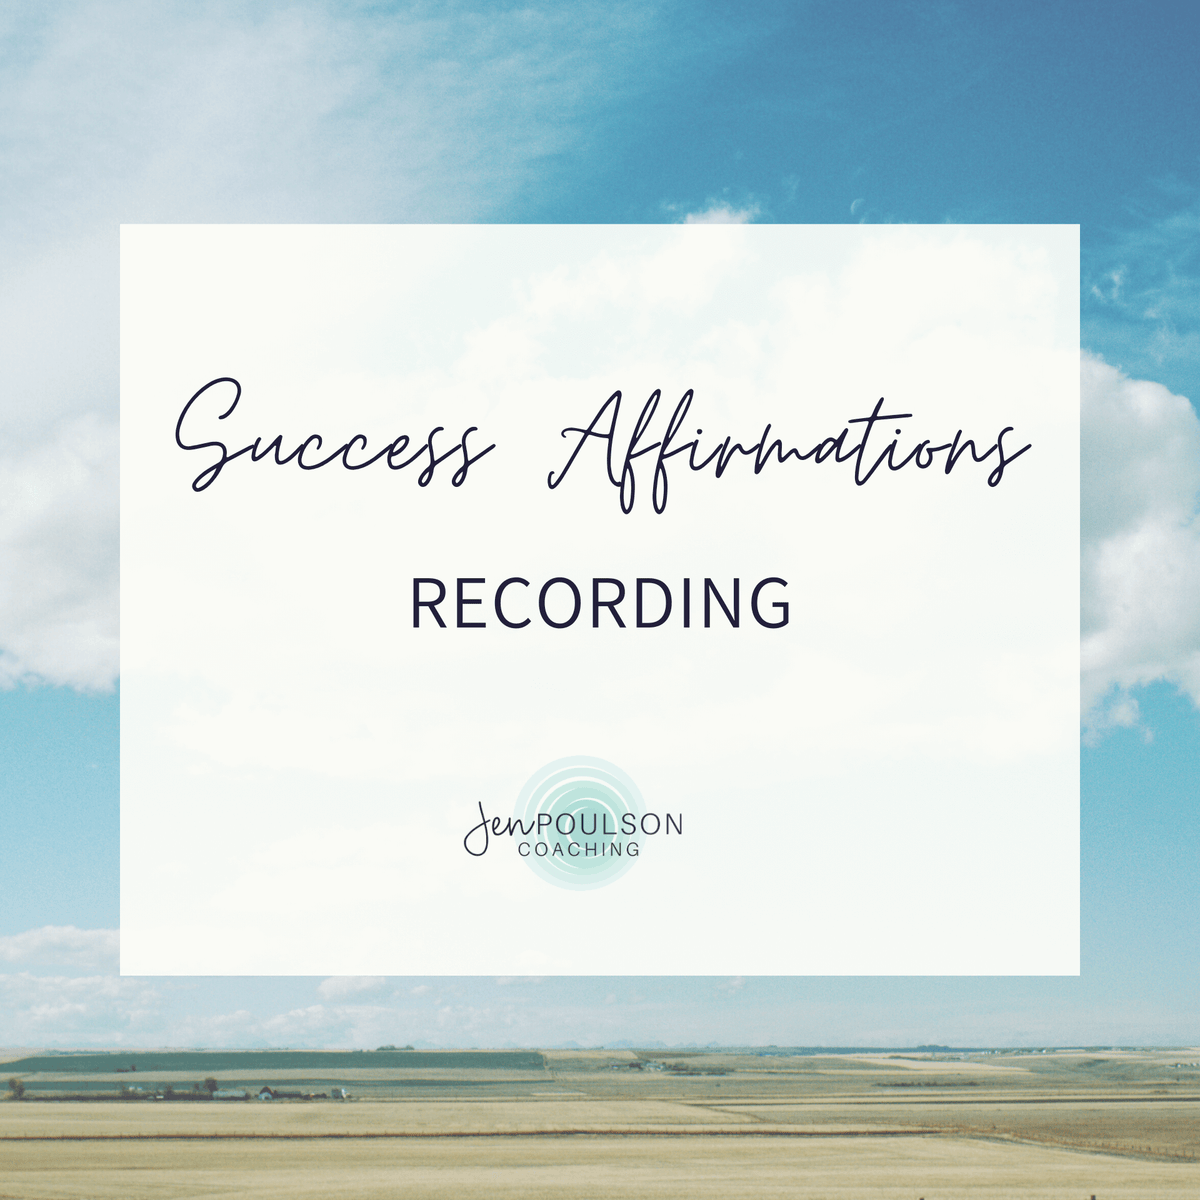 Success Affirmations Recording